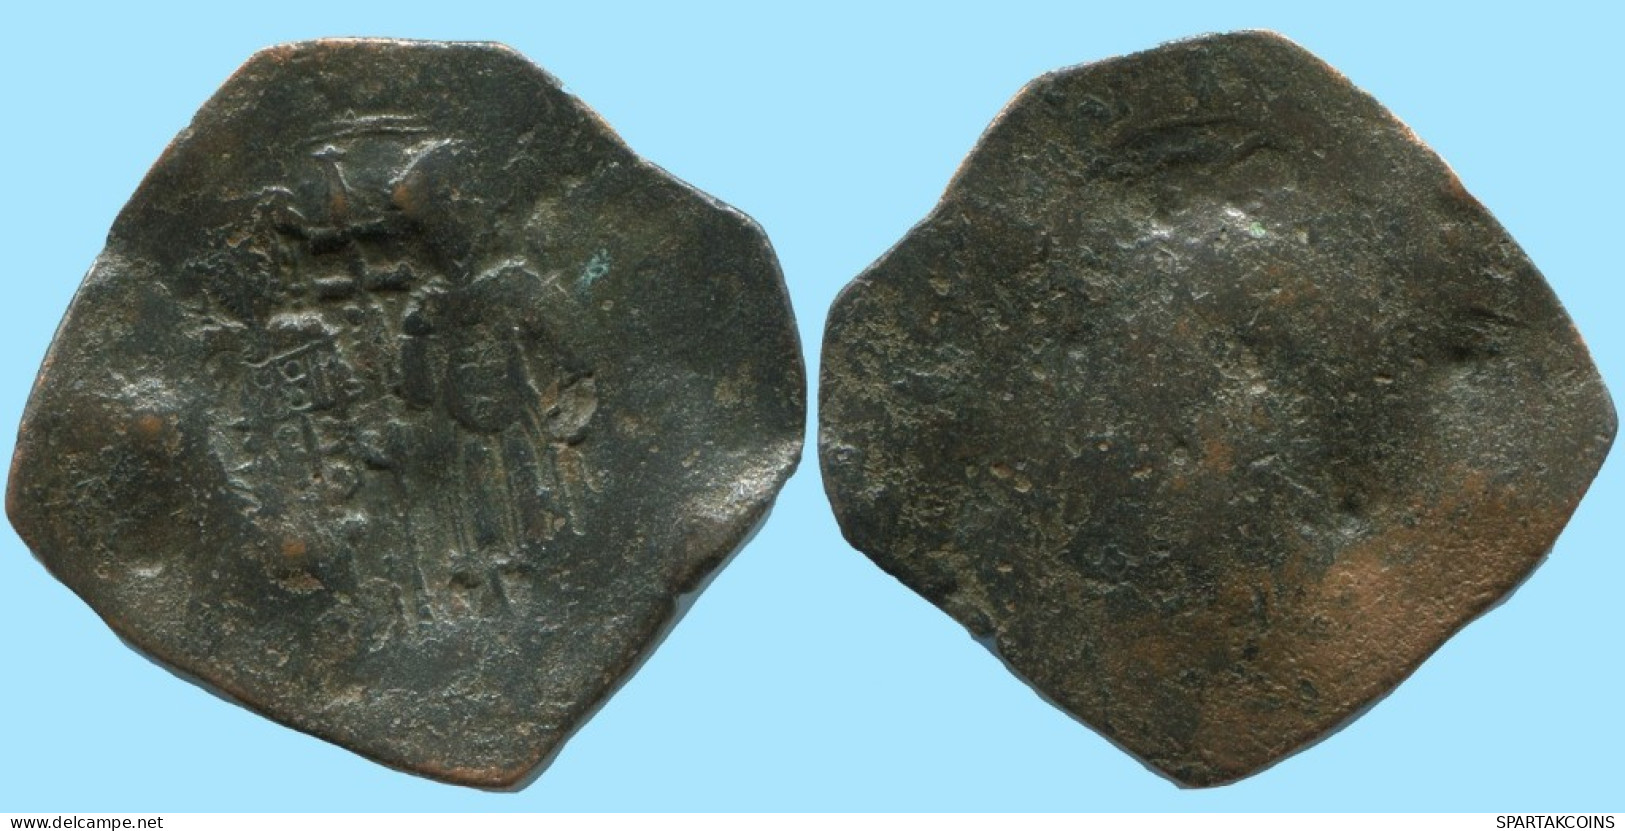 ALEXIOS III ANGELOS ASPRON TRACHY BILLON BYZANTINE Moneda 2.7g/27mm #AB455.9.E.A - Byzantinische Münzen